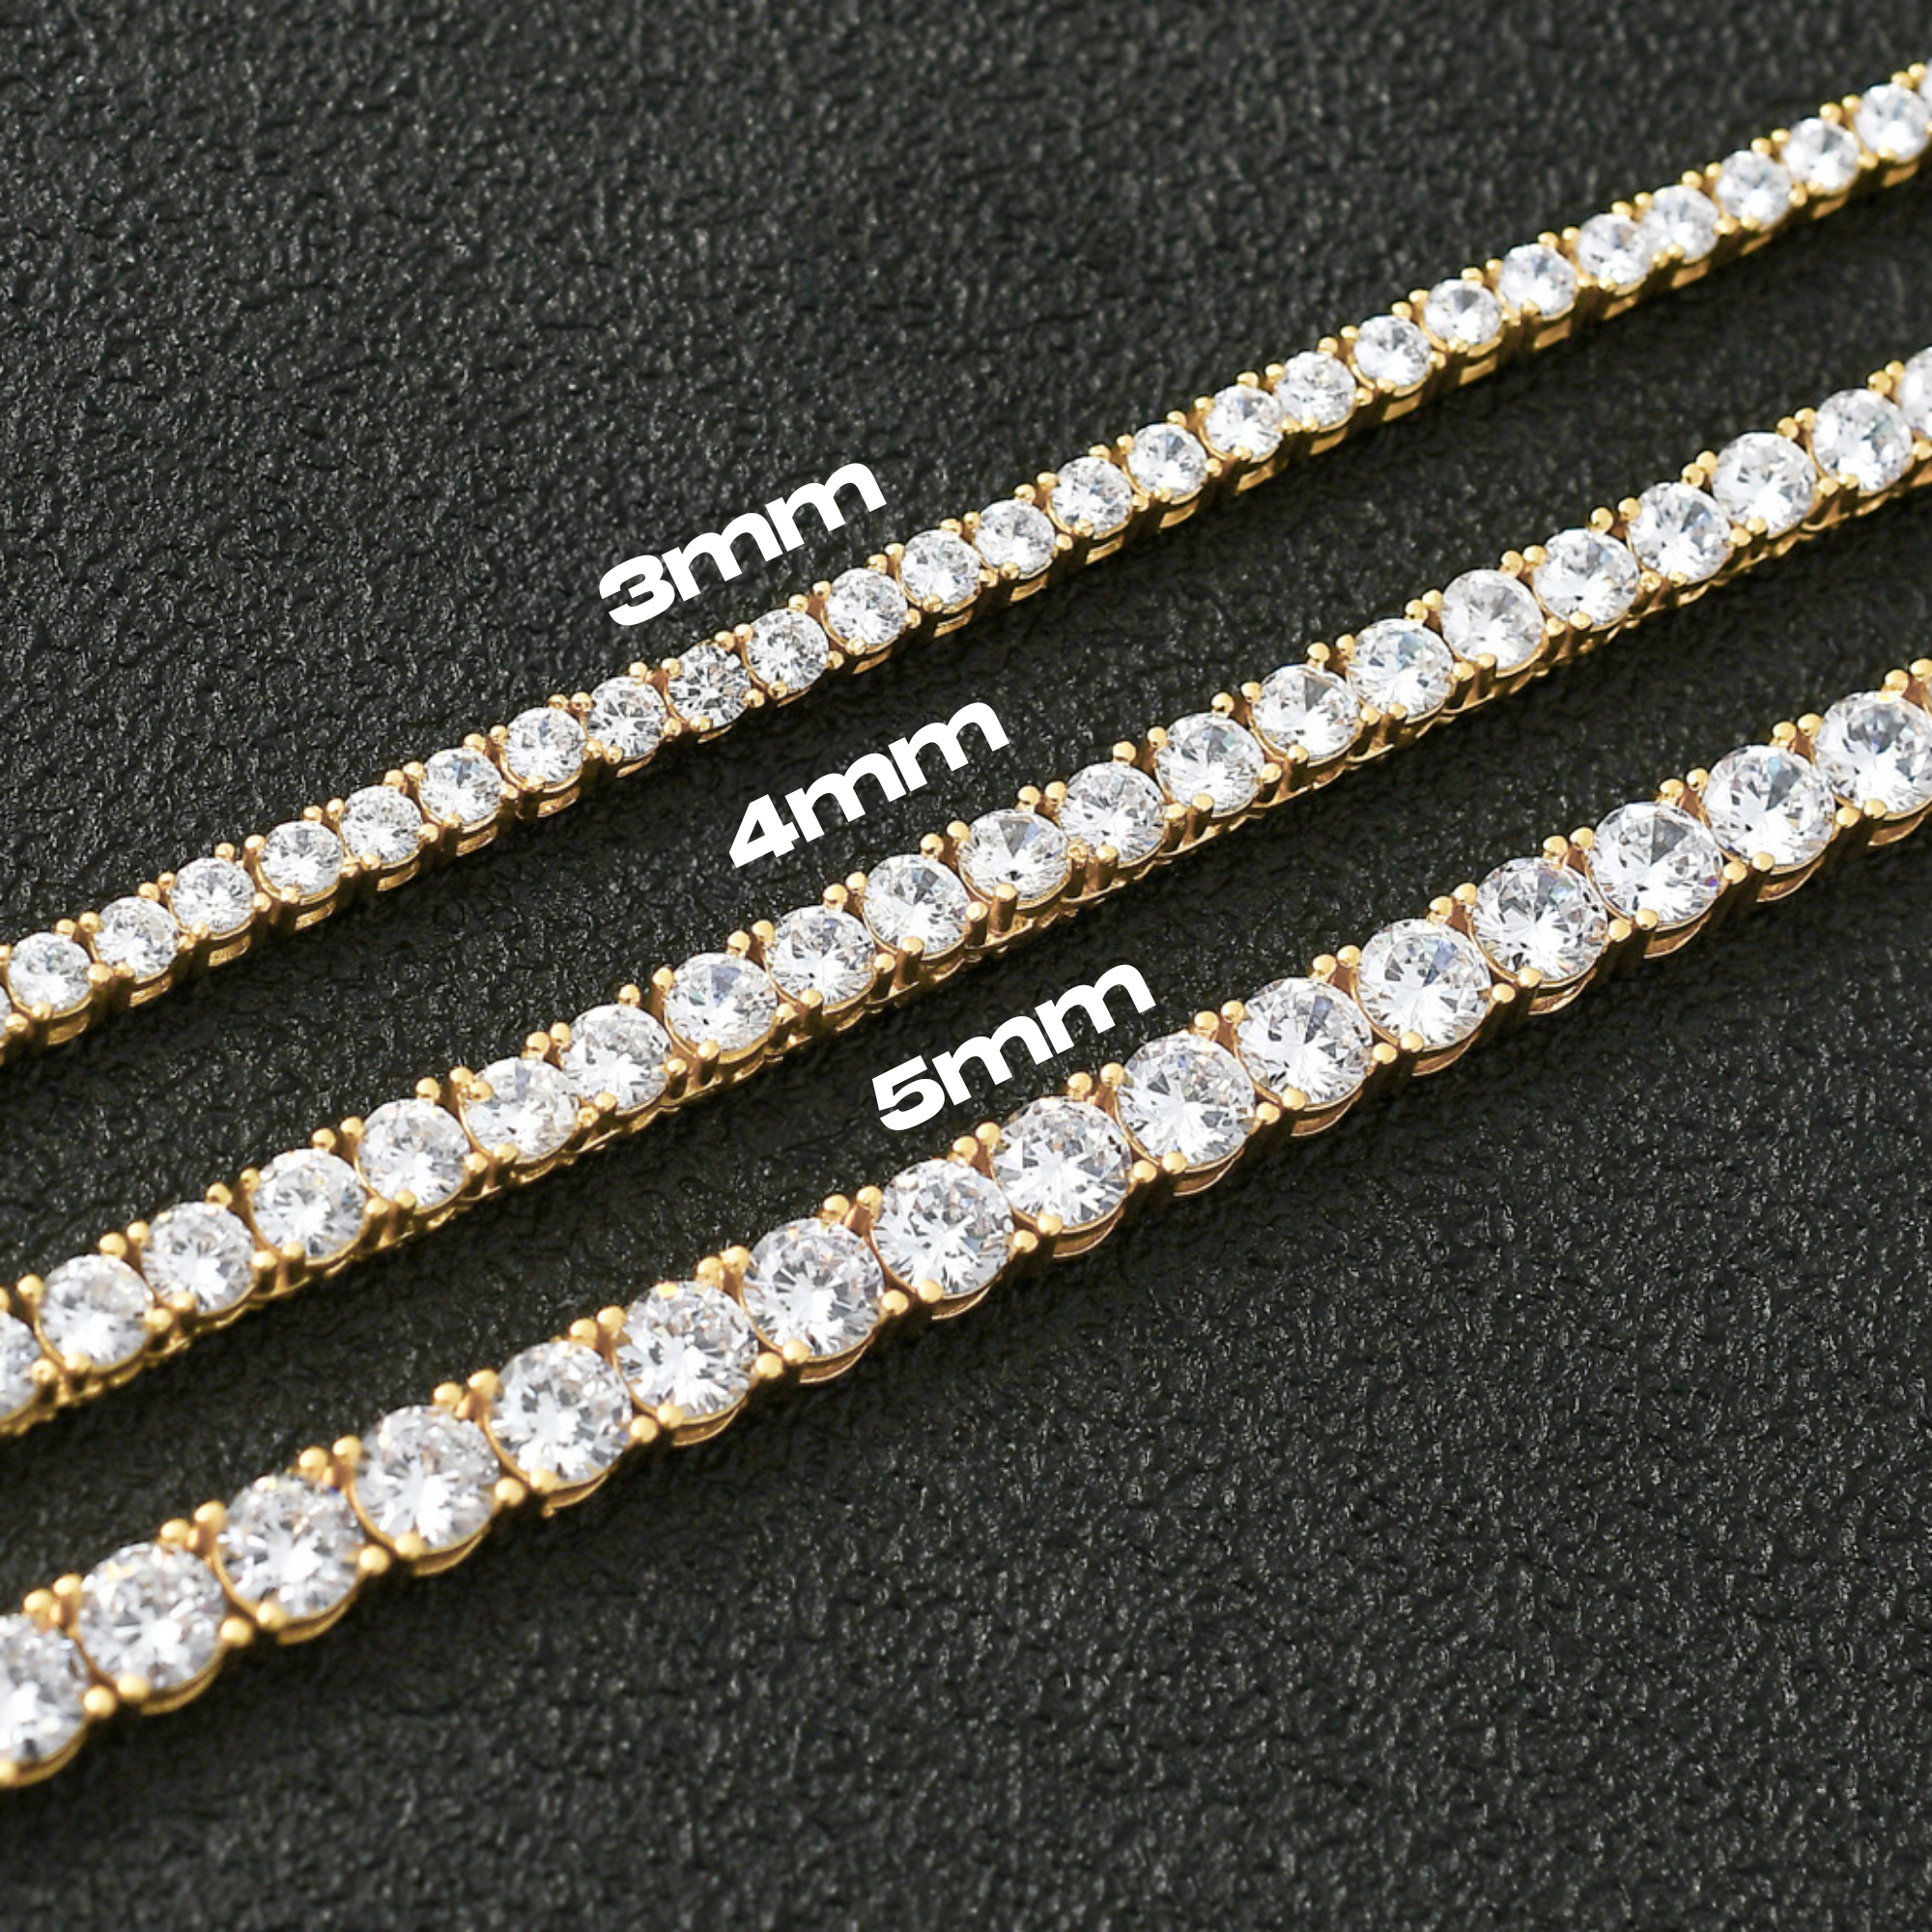 Hillenic Gold tennis chain & Gold Tennis Bracelet width comparison, 3mm, 4mm, 5mm